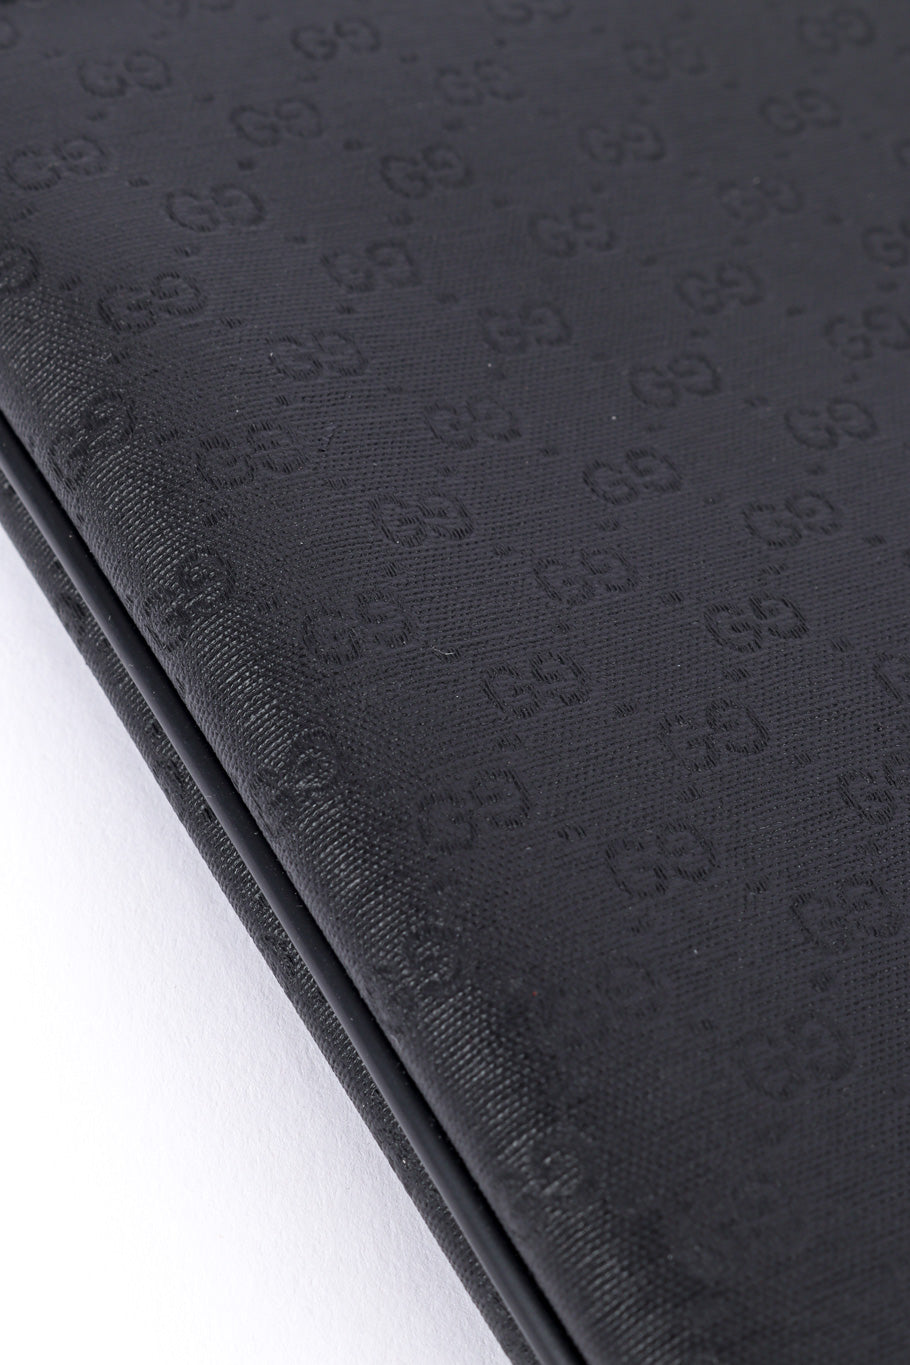 Gucci Monogram Canvas Laptop Sleeve fabric closeup @recessla